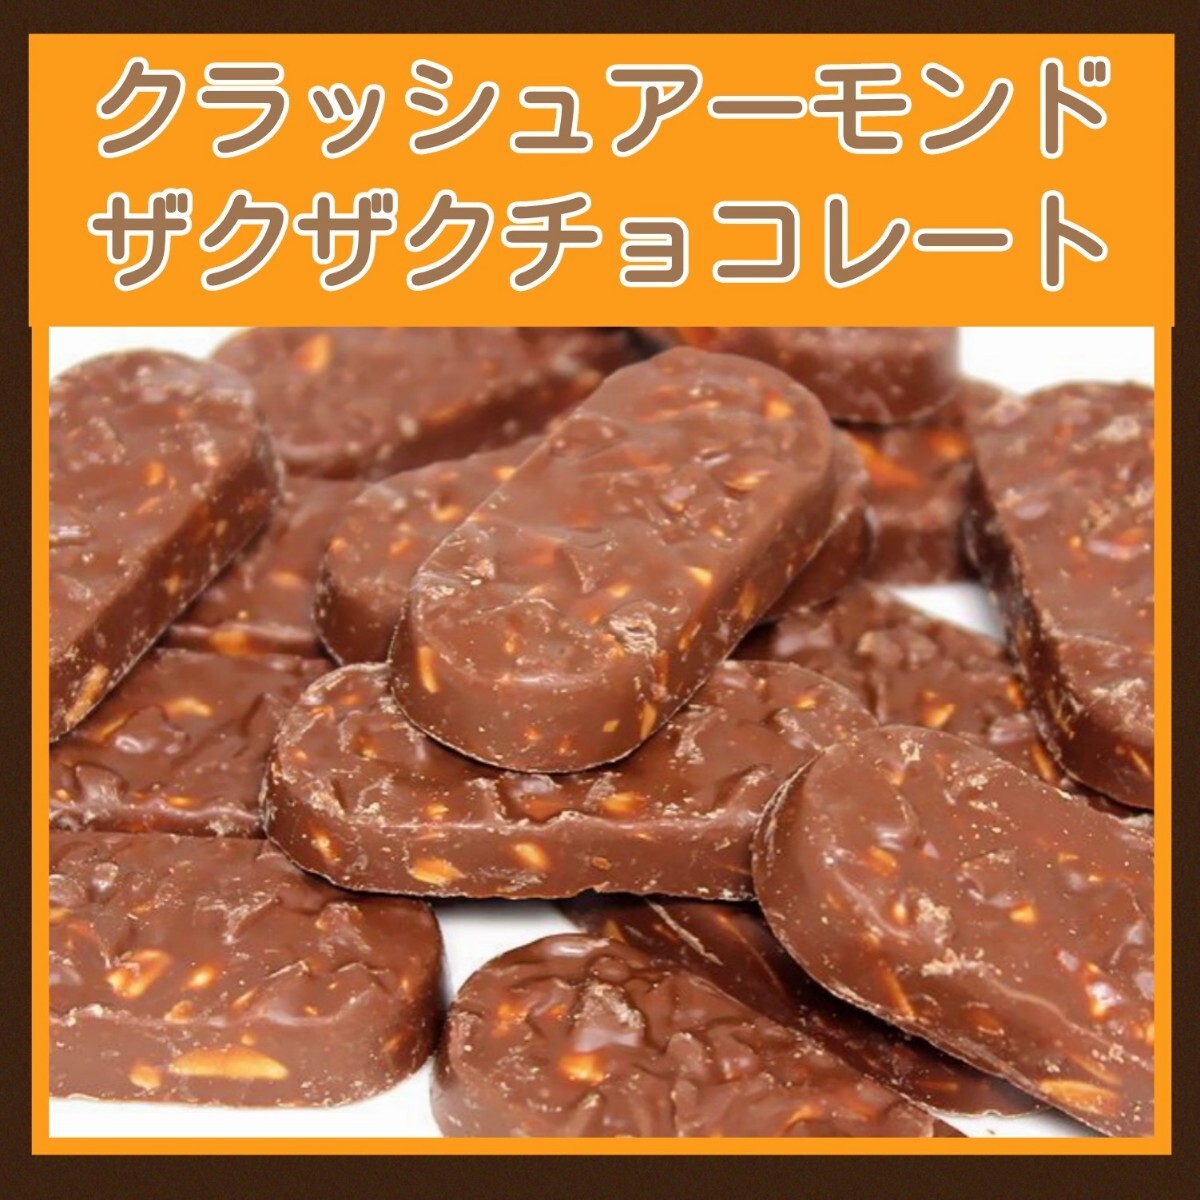 # high capacity 22 sack!# almond tightly chocolate # Monro wa-ru crash almond # almond enough 